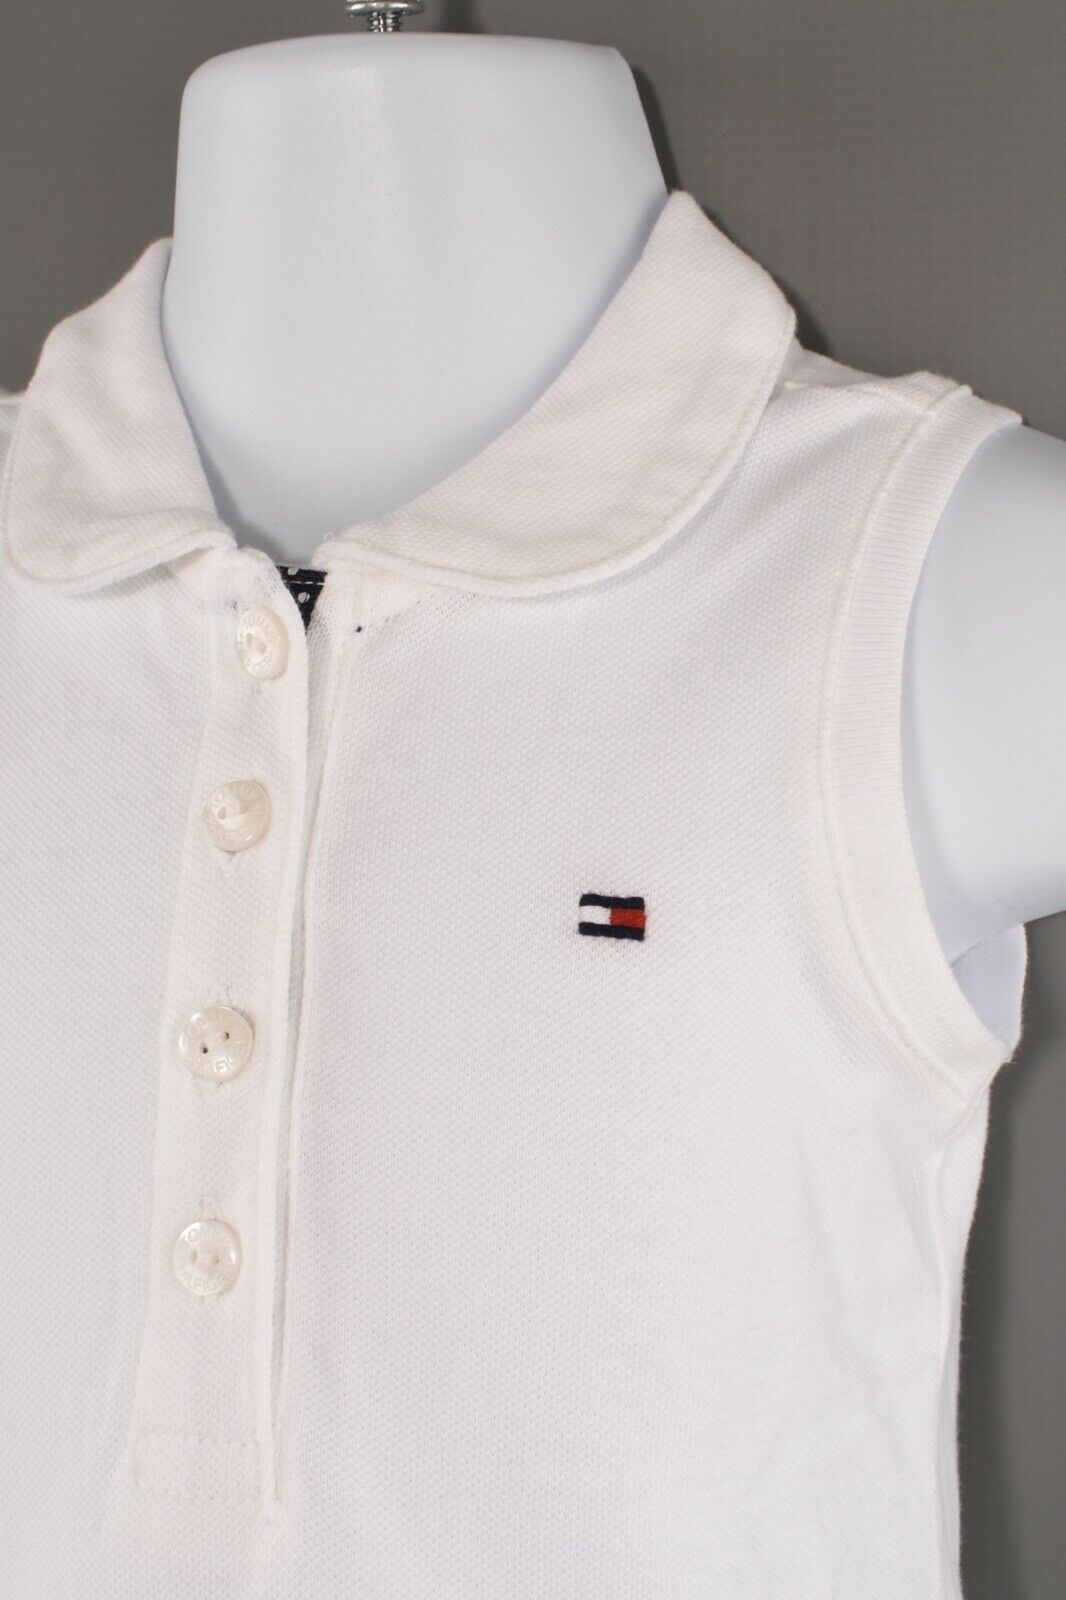 TOMMY HILFIGER Baby Girls' White Sleeveless Polo Dress, 12 m /18 m /24 months